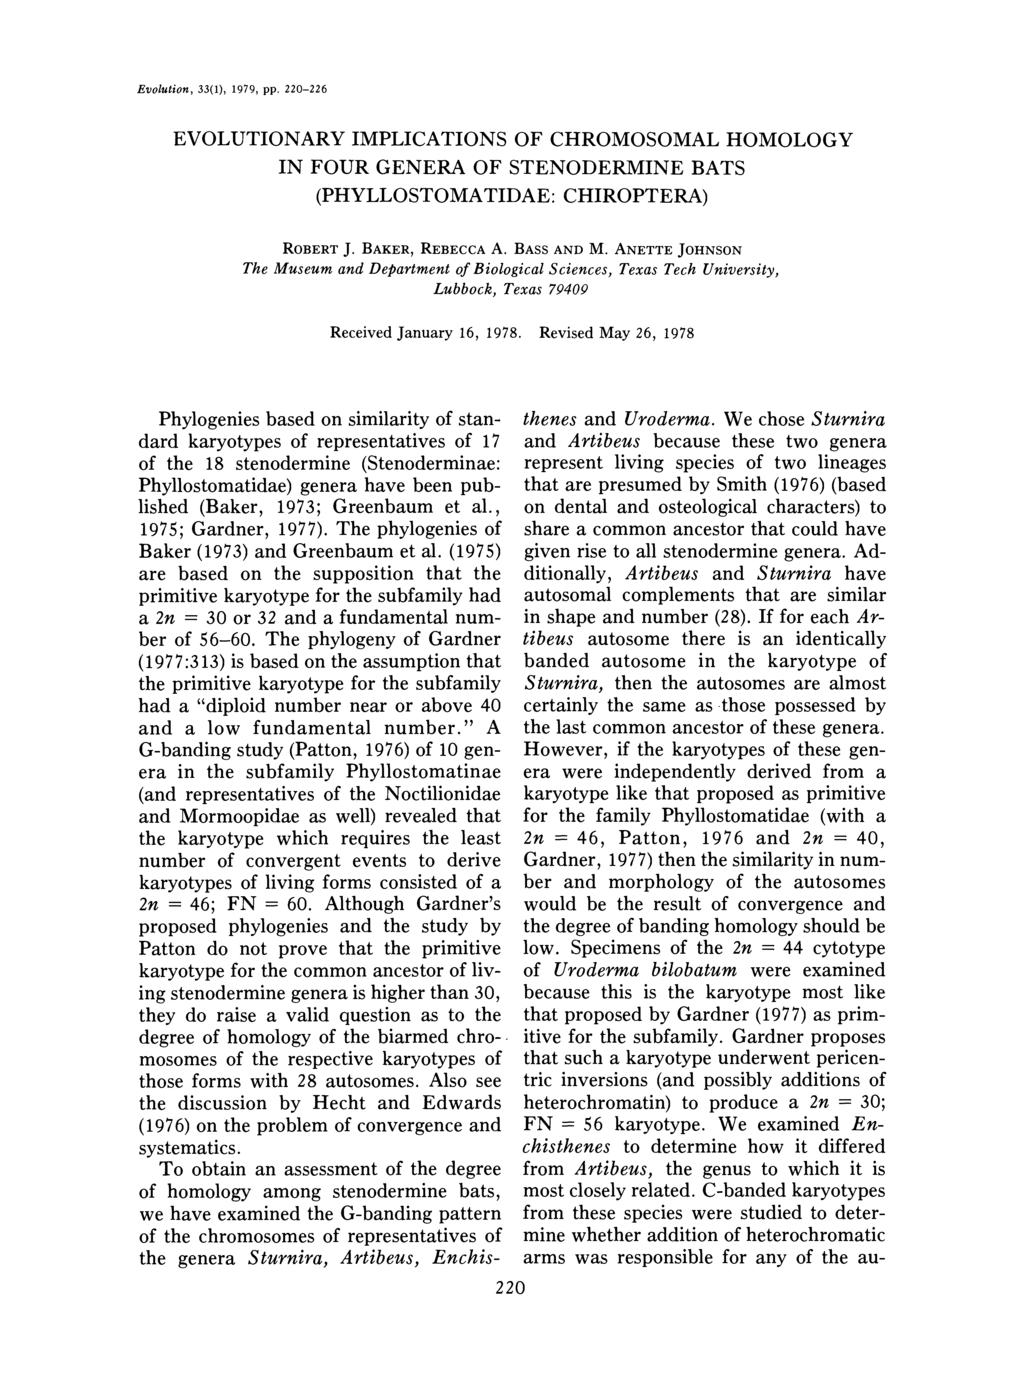 Evolution, 33(1), 1979, pp. 220-226 EVOLUTIONARY IMPLICATIONS OF CHROMOSOMAL HOMOLOGY IN FOUR GENERA OF STENODERMINE BATS (PHYLLOSTOMATIDAE: CHIROPTERA) ROBERTJ. BAKER, REBECC A. BASS AND M.